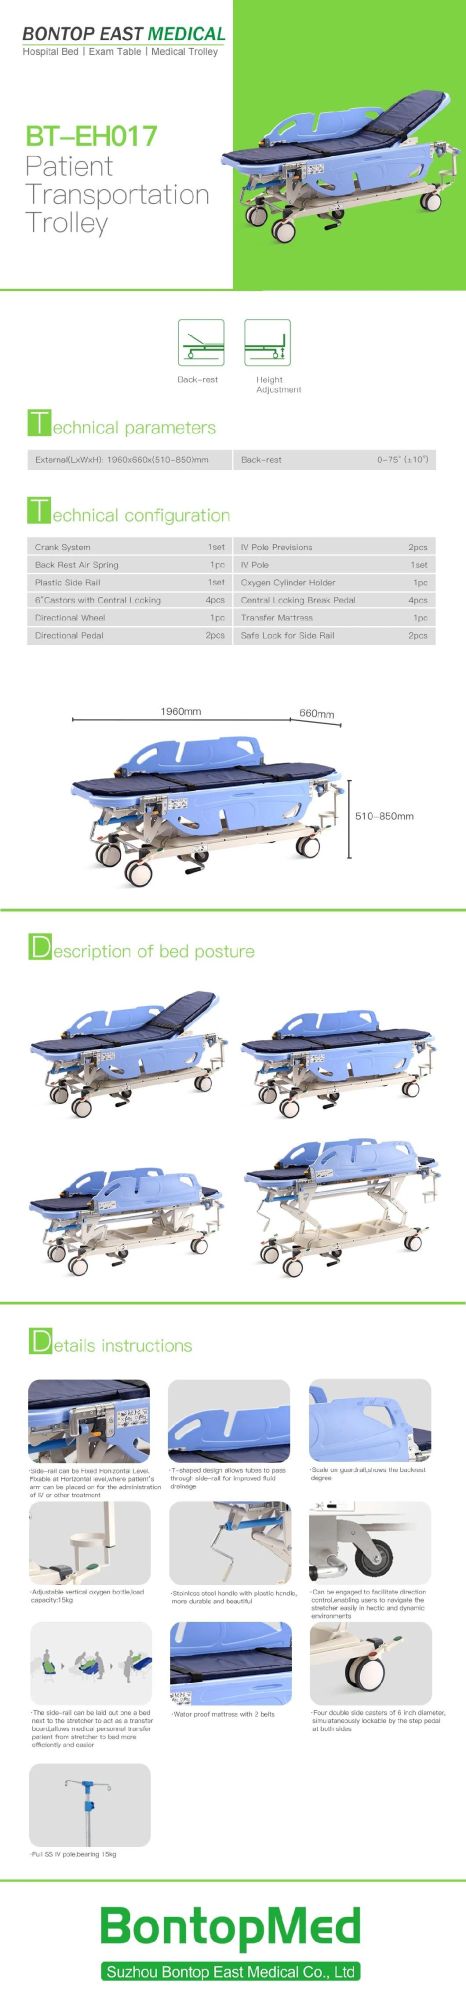 Medical Equipment Operating Room Emergency Hospital Transport Patient Transfer Trolley